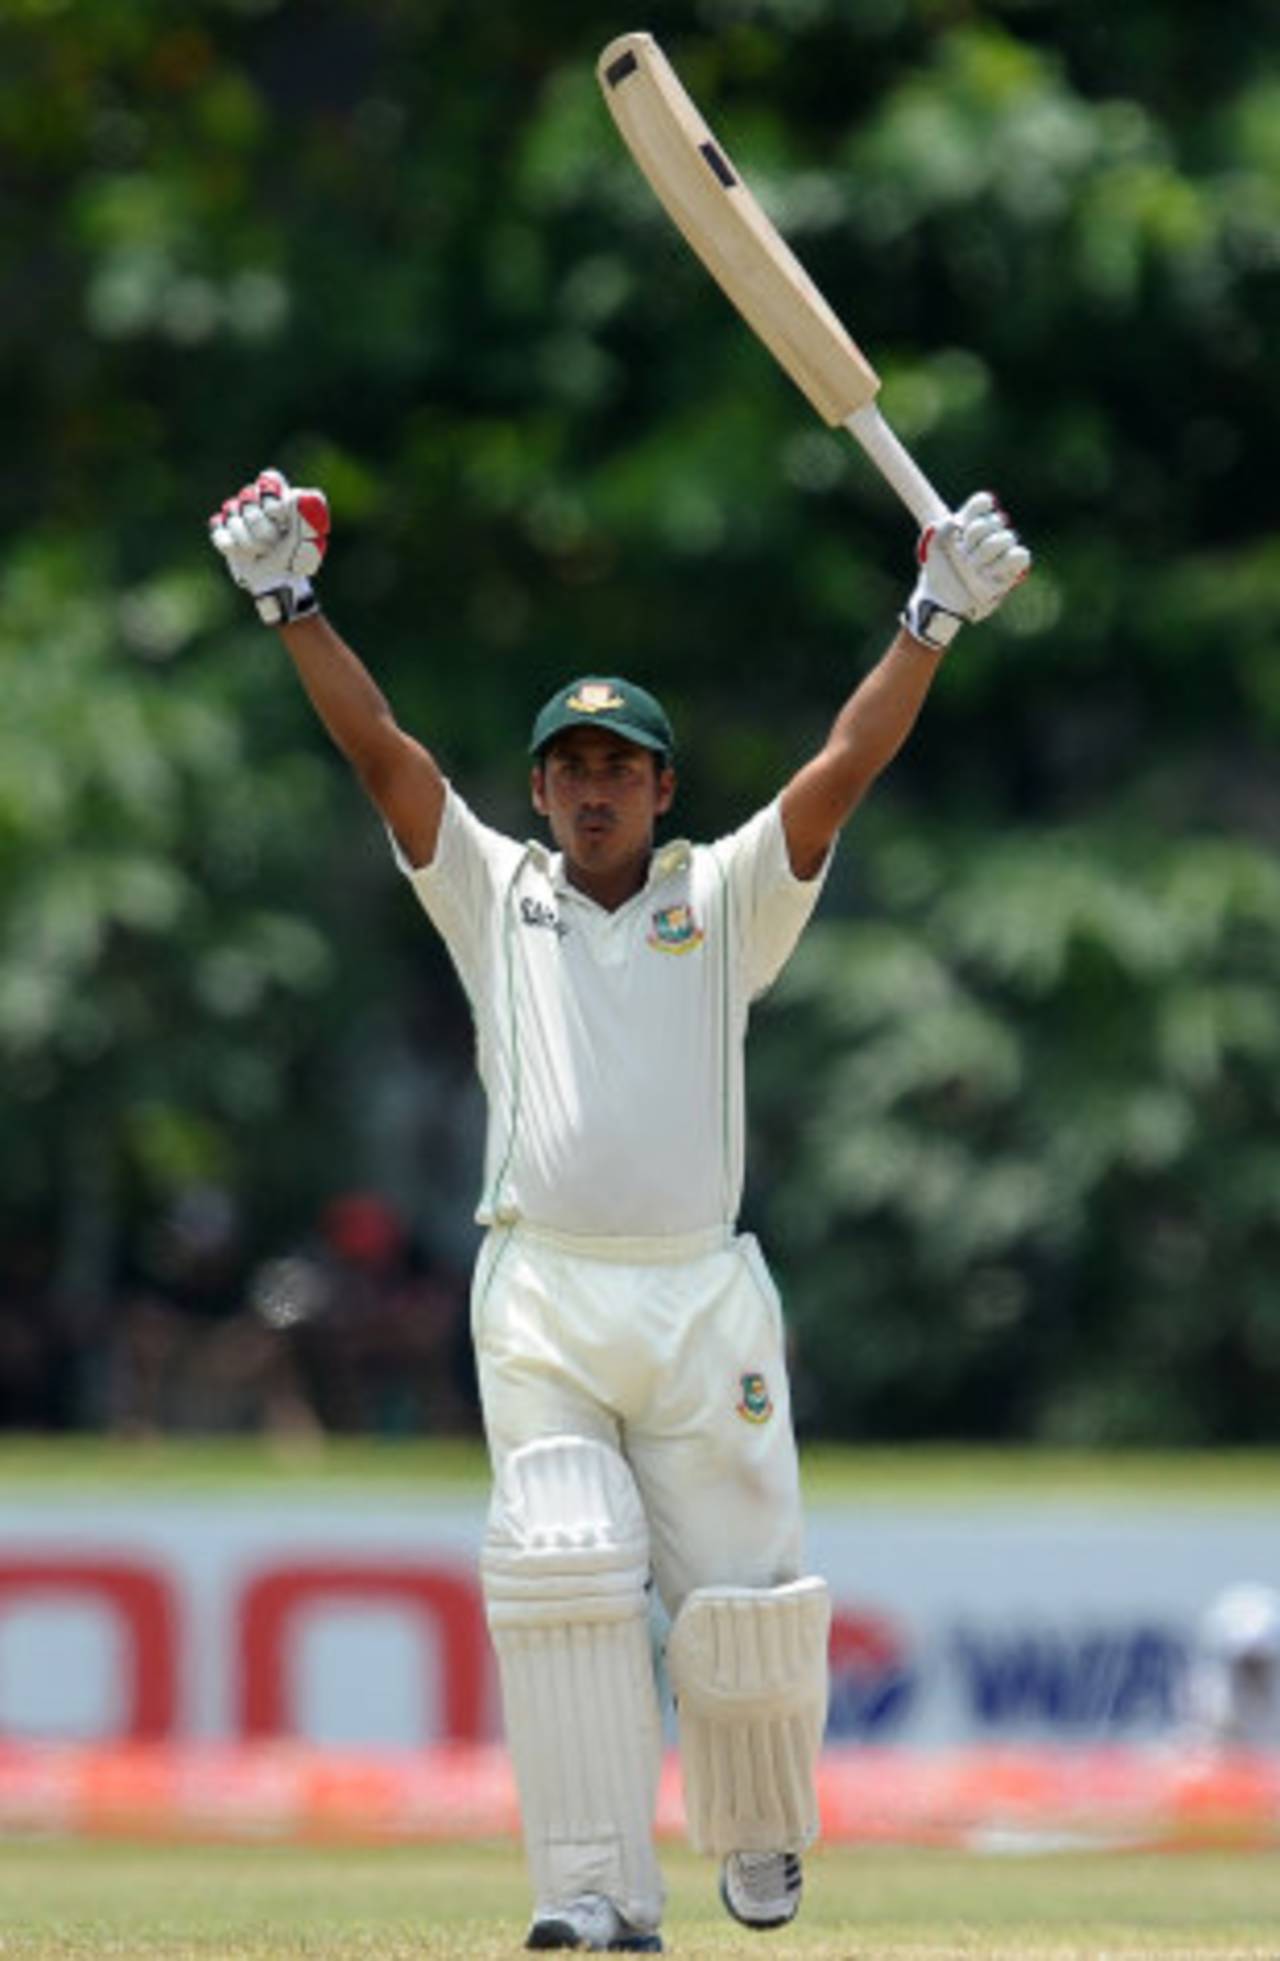 Mohammad Ashraful celebrates after scoring his sixth Test hundred, Sri Lanka v Bangladesh, 1st Test, Galle, 3rd day, March 10, 2013